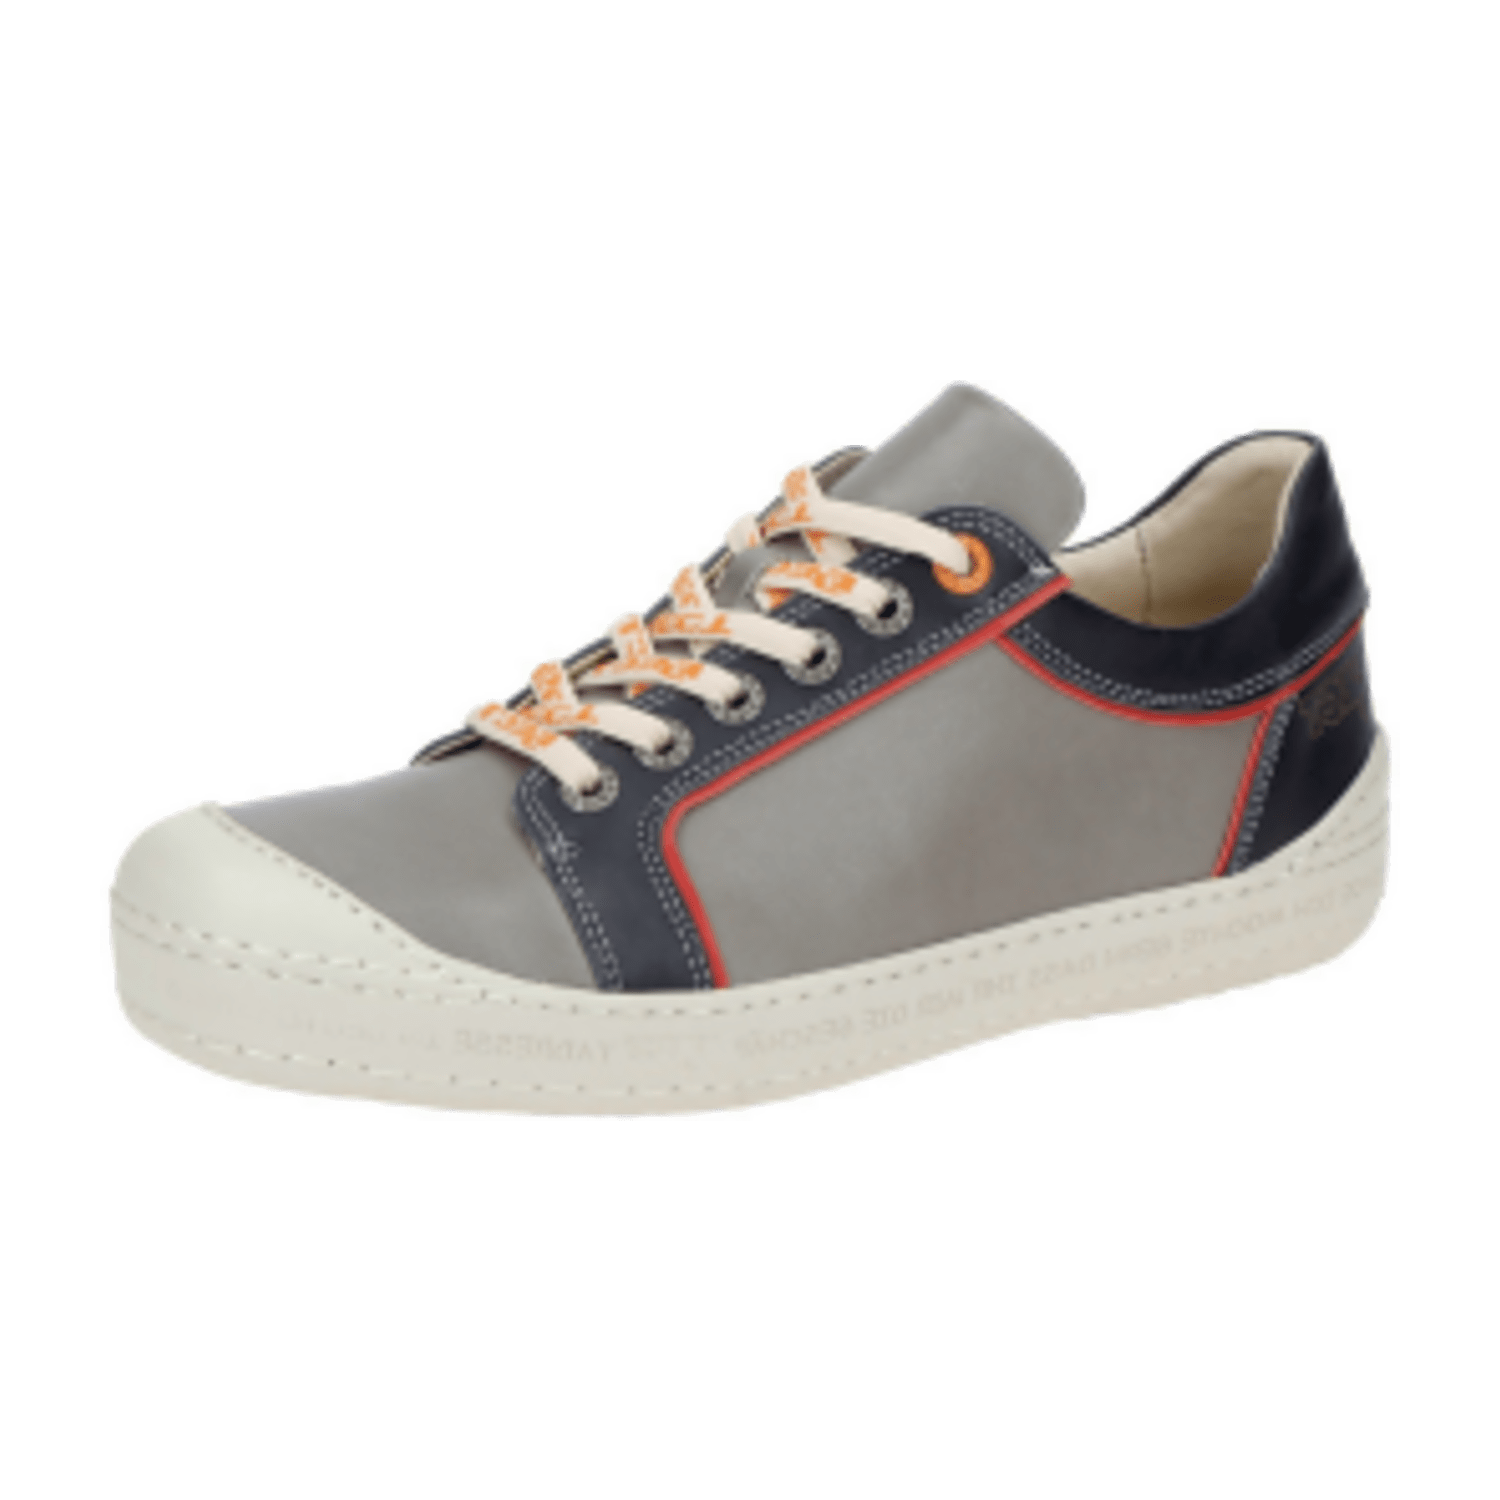 Eject Dass Schuhe grau schwarz rot Sneaker 20955